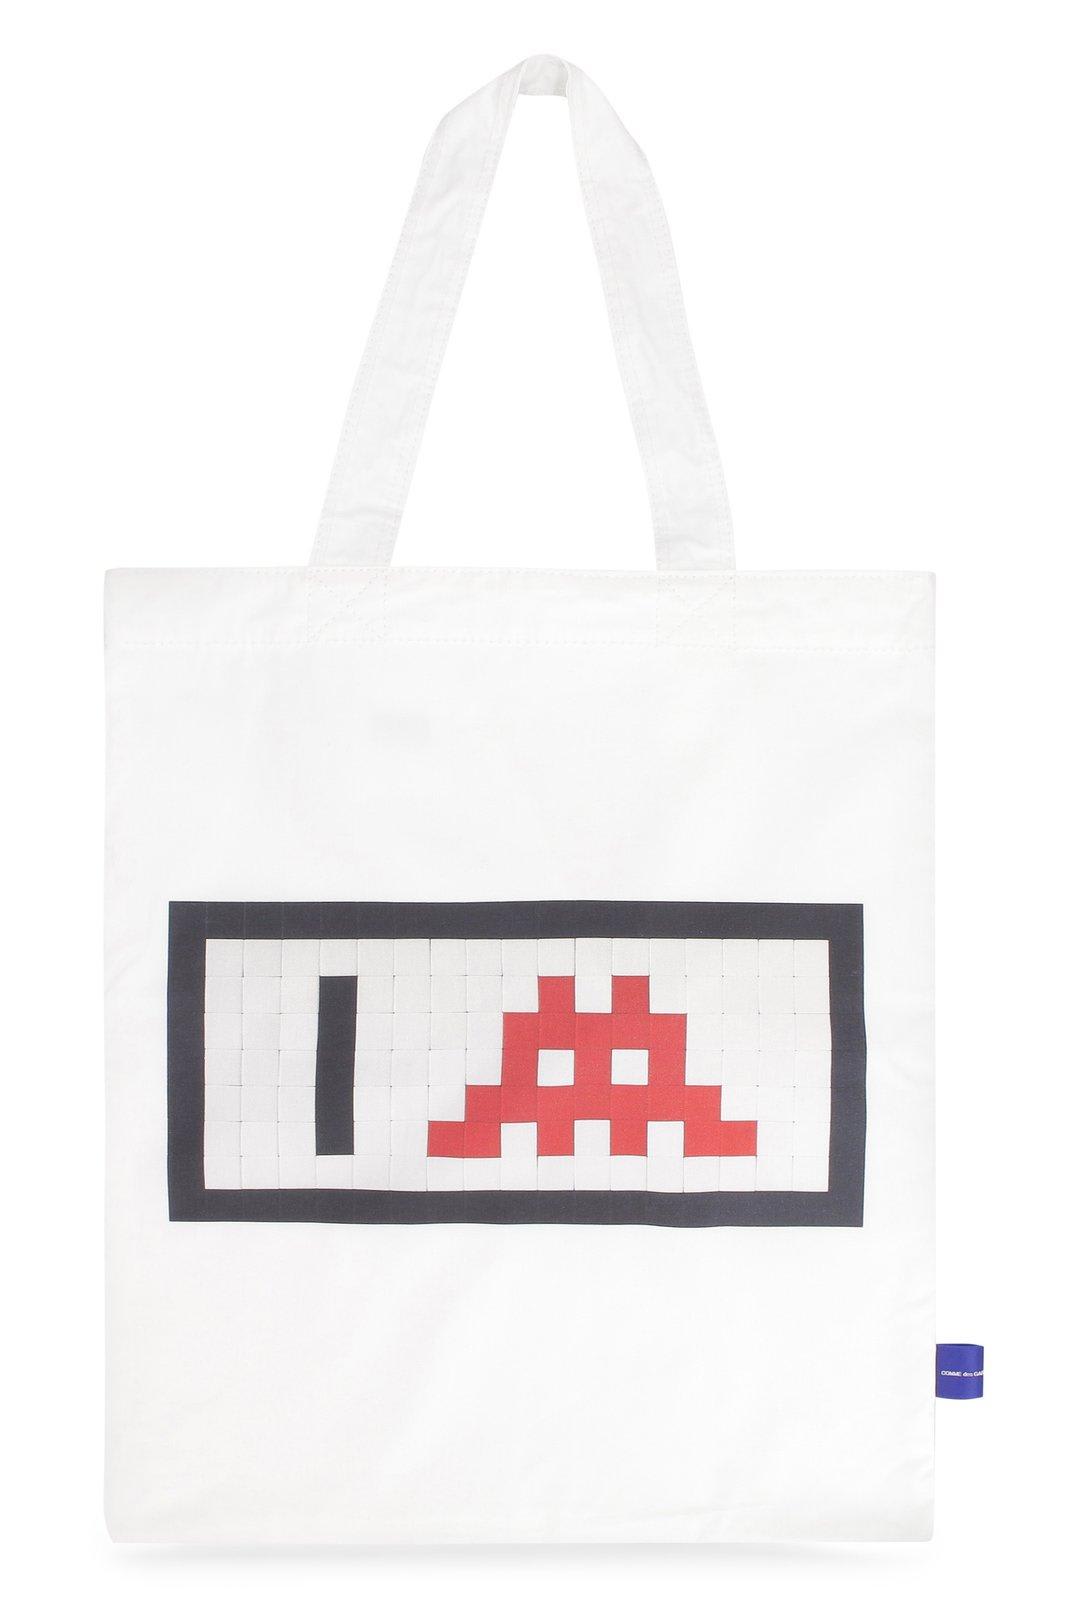 Comme des Garçons Shirt X Invader Pixelated Printed Tote Bag